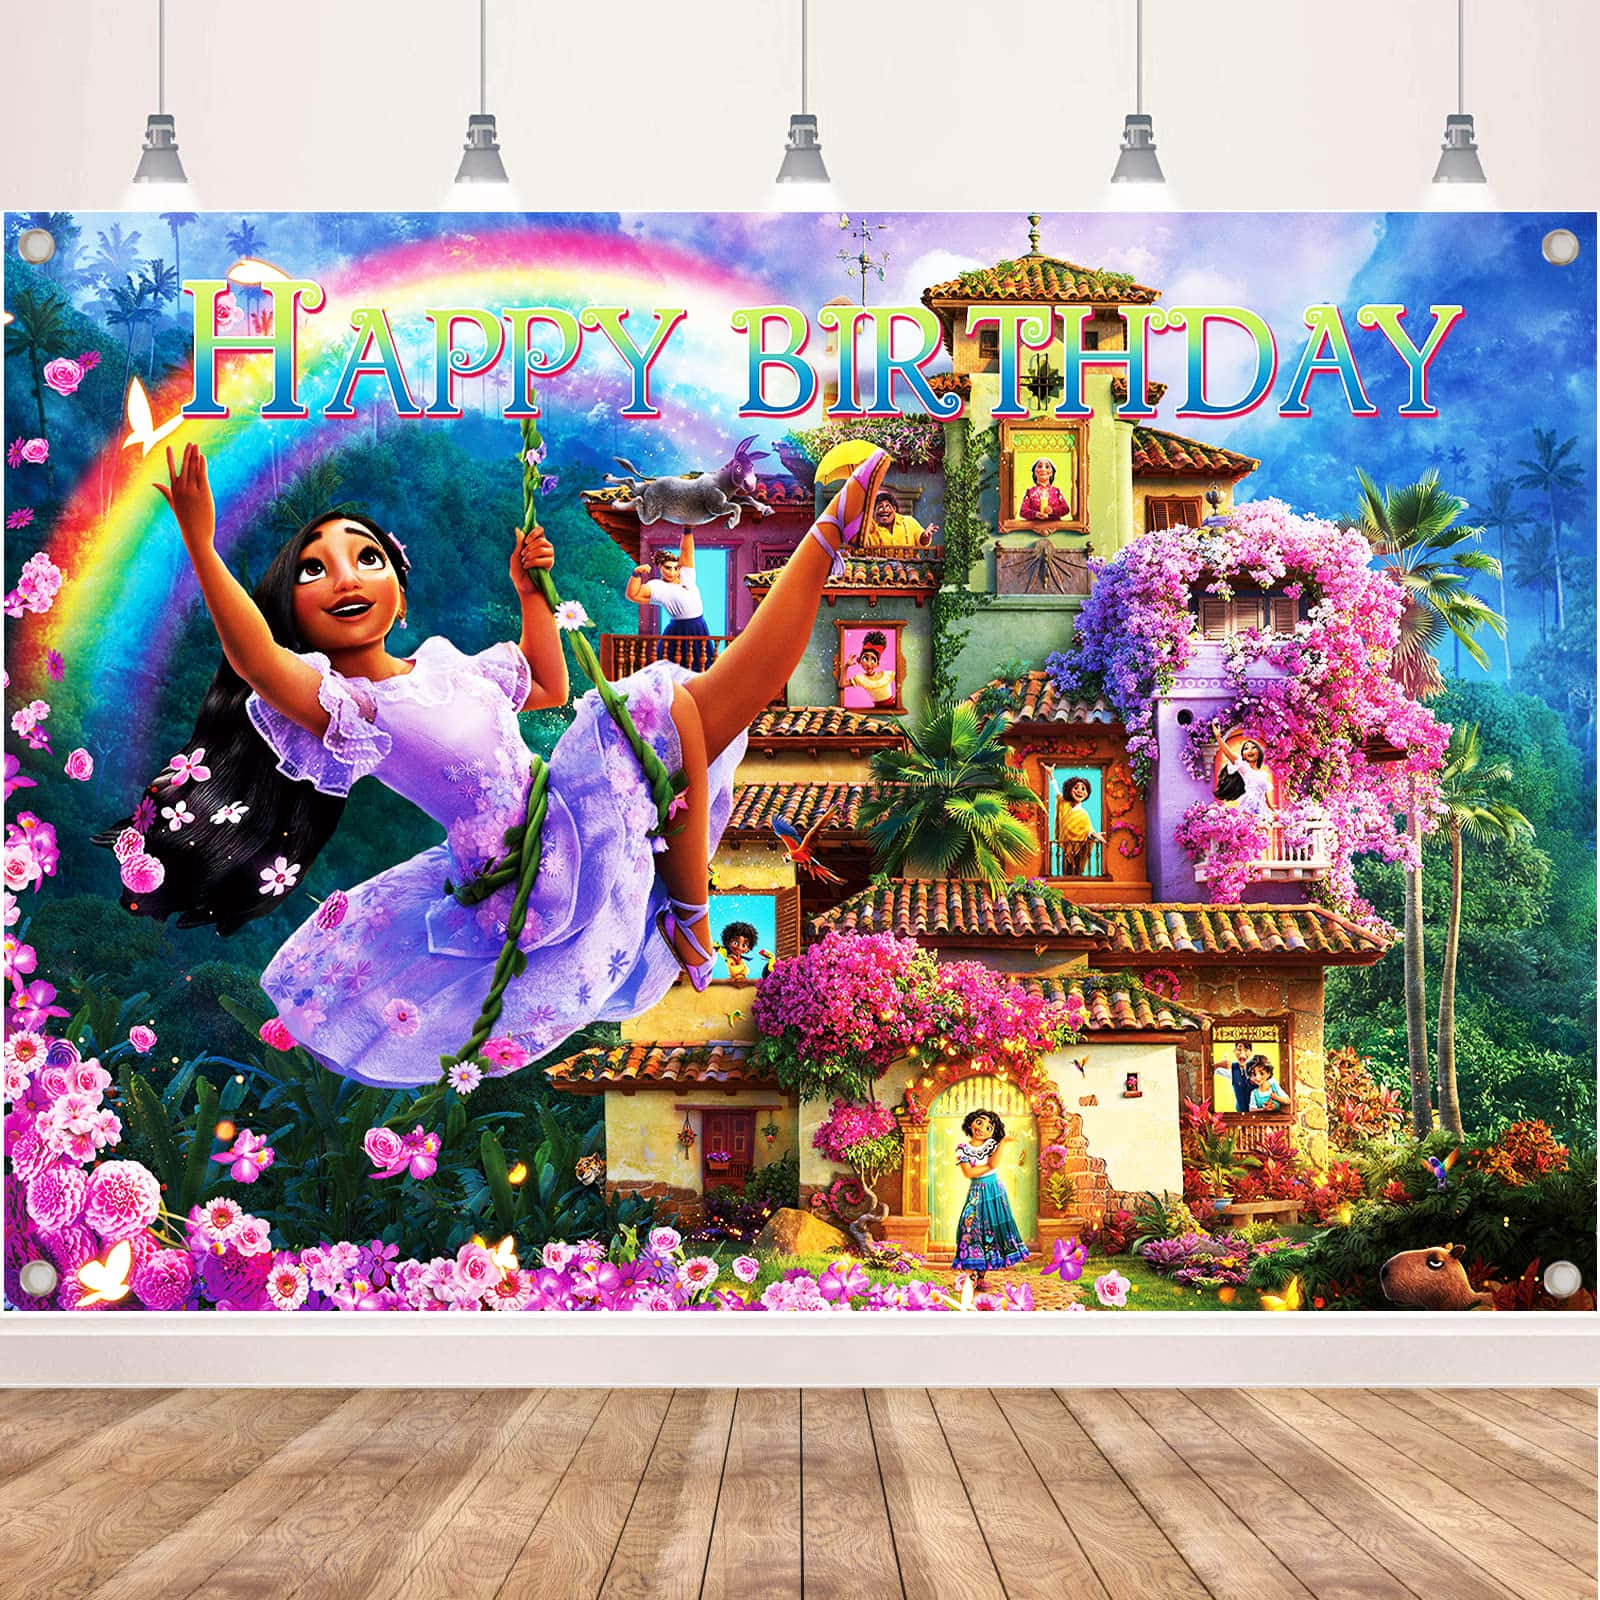 Encanto Isabela Happy Birthday Poster Background